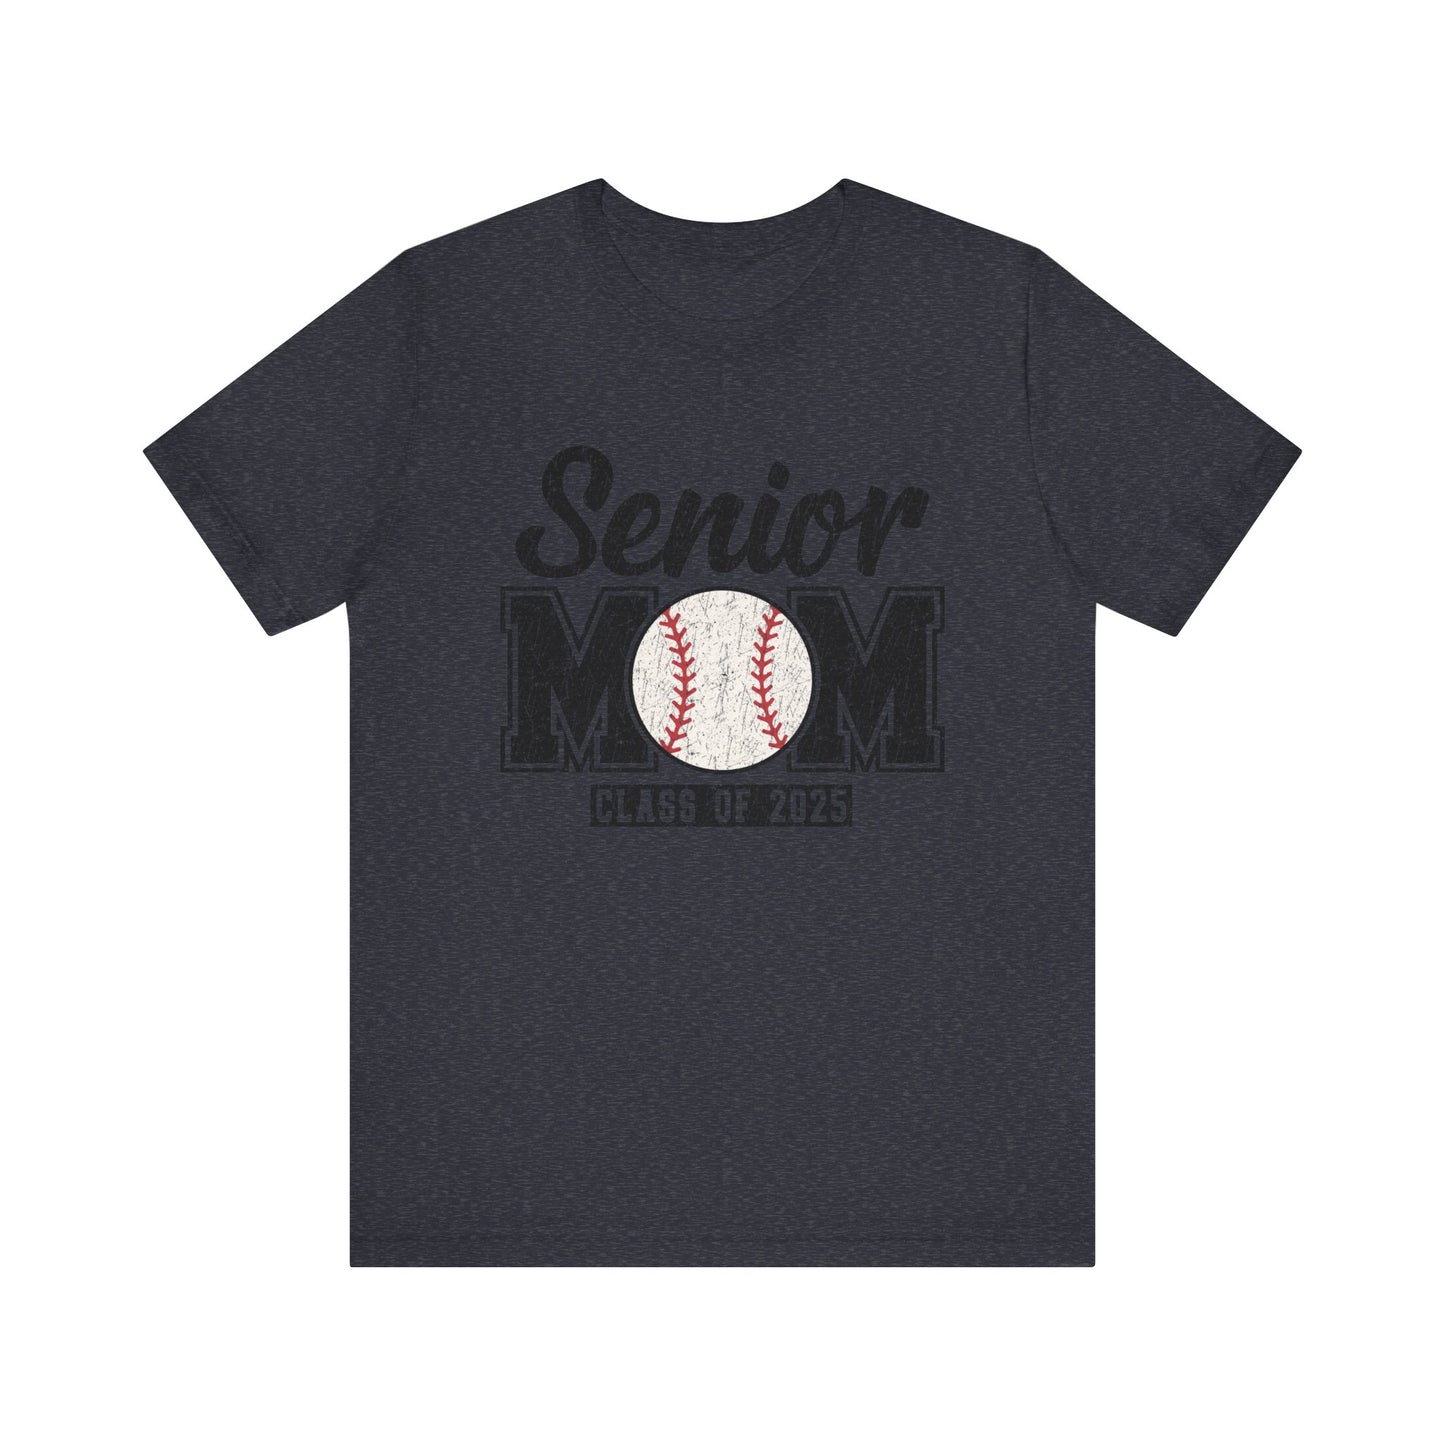 Senior Mom Baseball Mom Class of 2025 Mama Short Sleeve Shirt